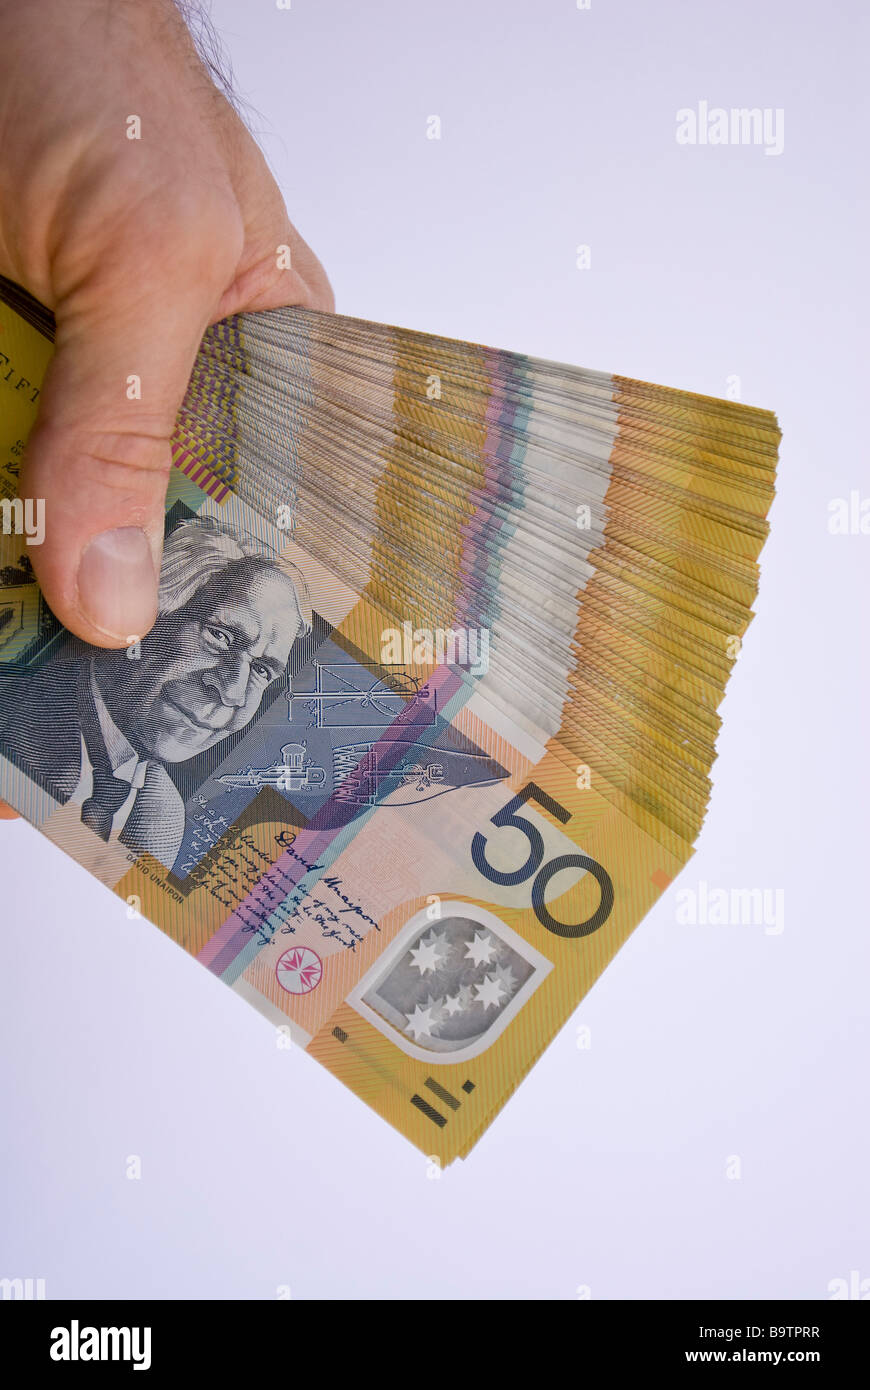 A fan of A$20,000 Aus $20,000 thousand Australian dollars in a hand Stock Photo - Alamy